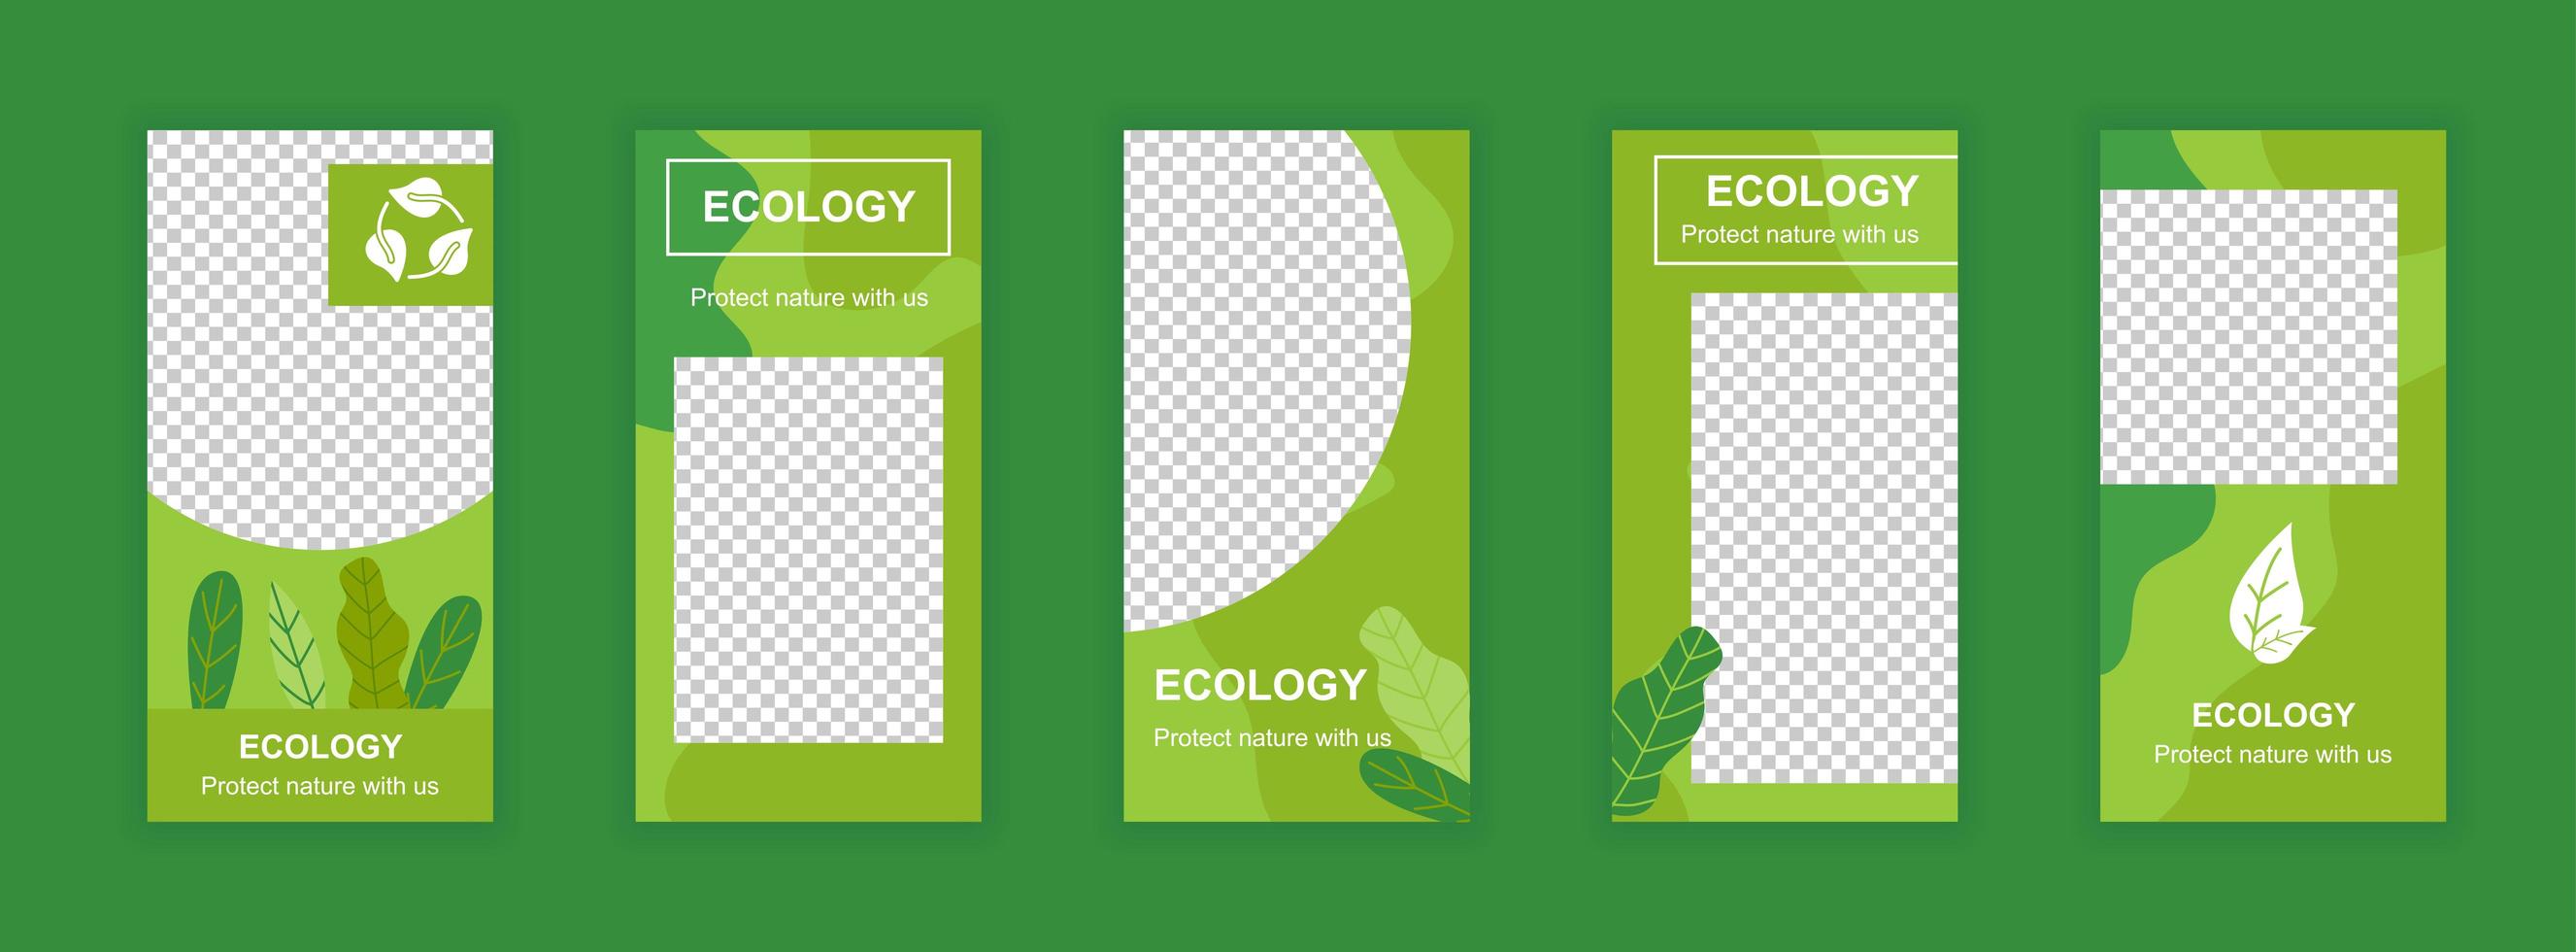 Ecology and environment editable social media stories templates vector